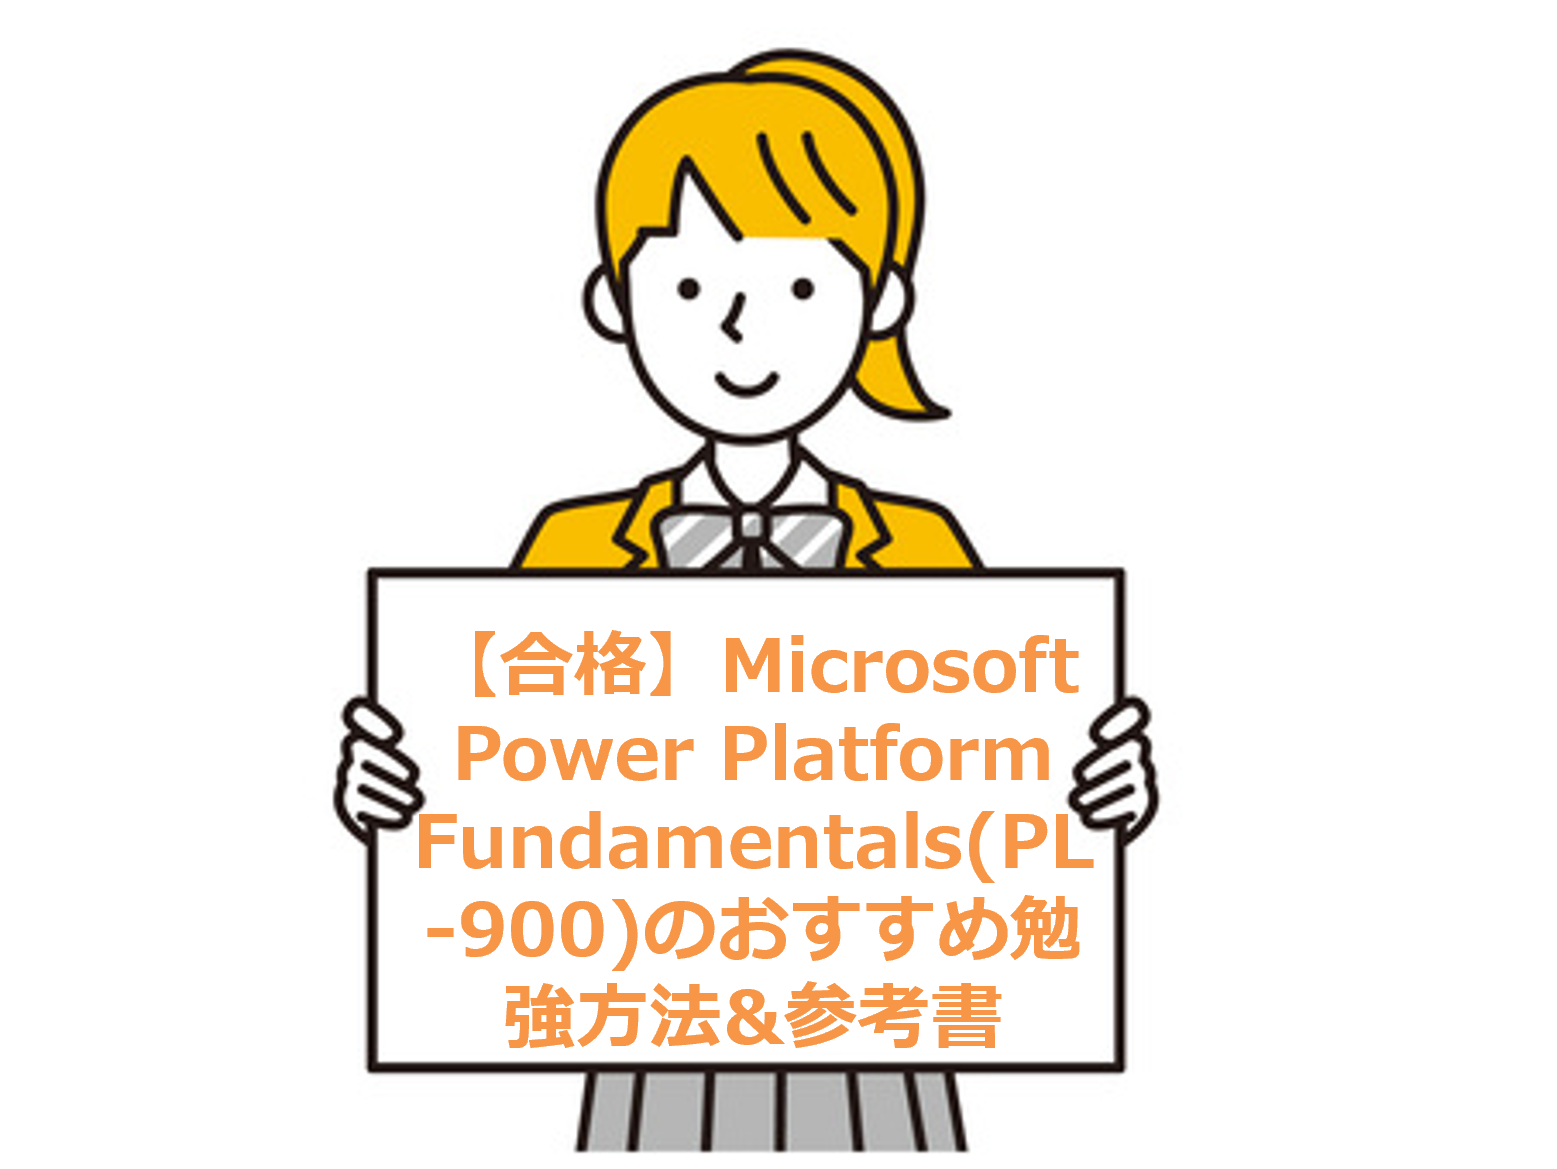 Microsoft Power Platform Fundamentals(PL-900)